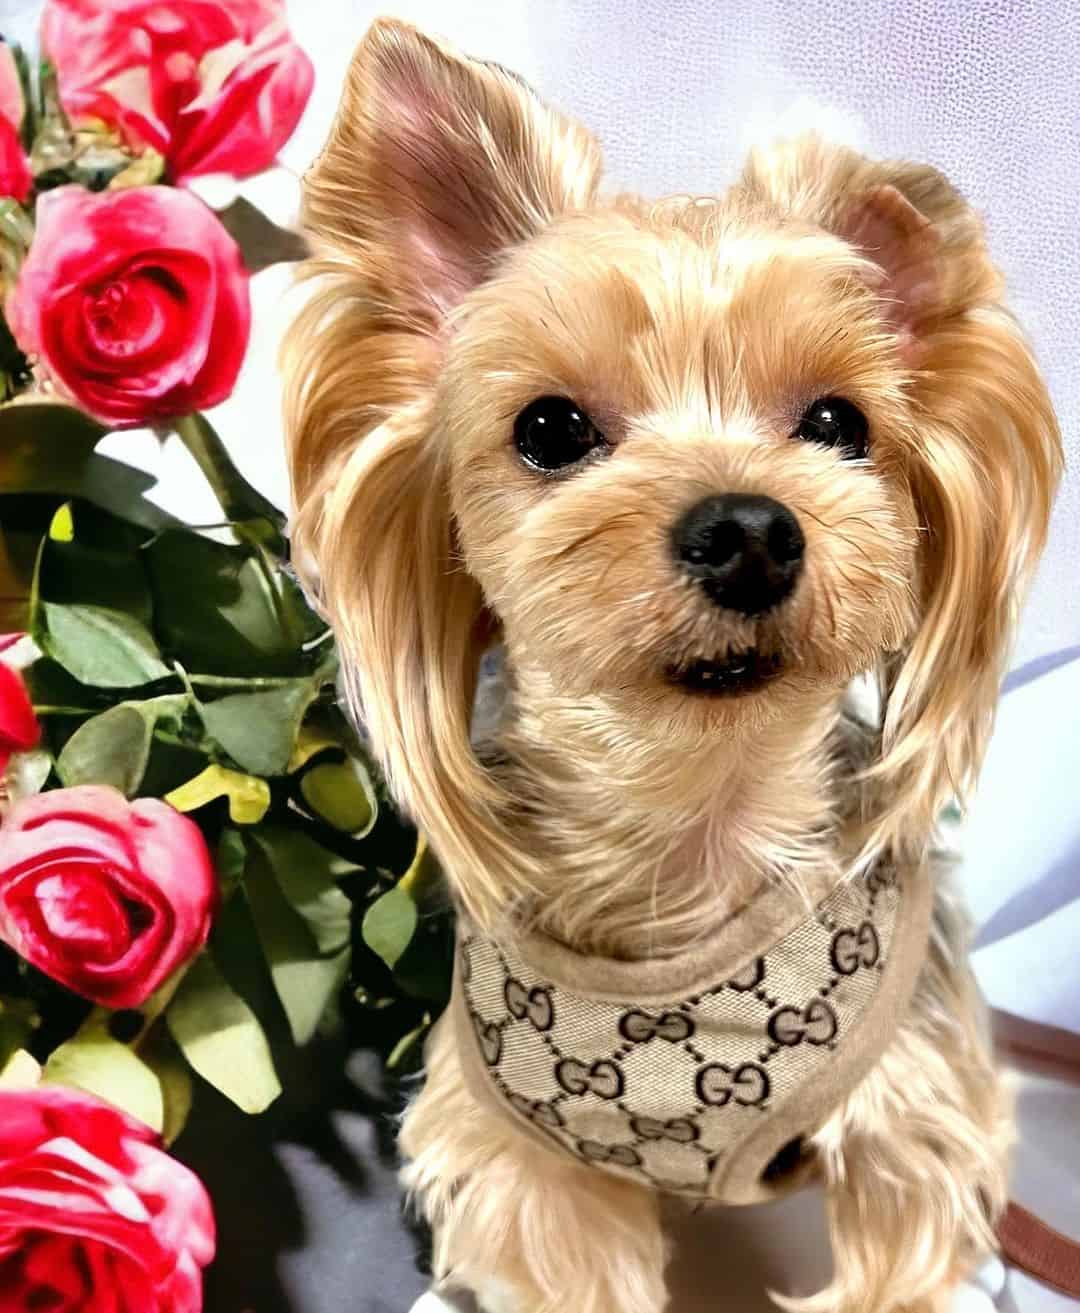 Gucci dog harness, New gucci dog supplies, Free Shipping